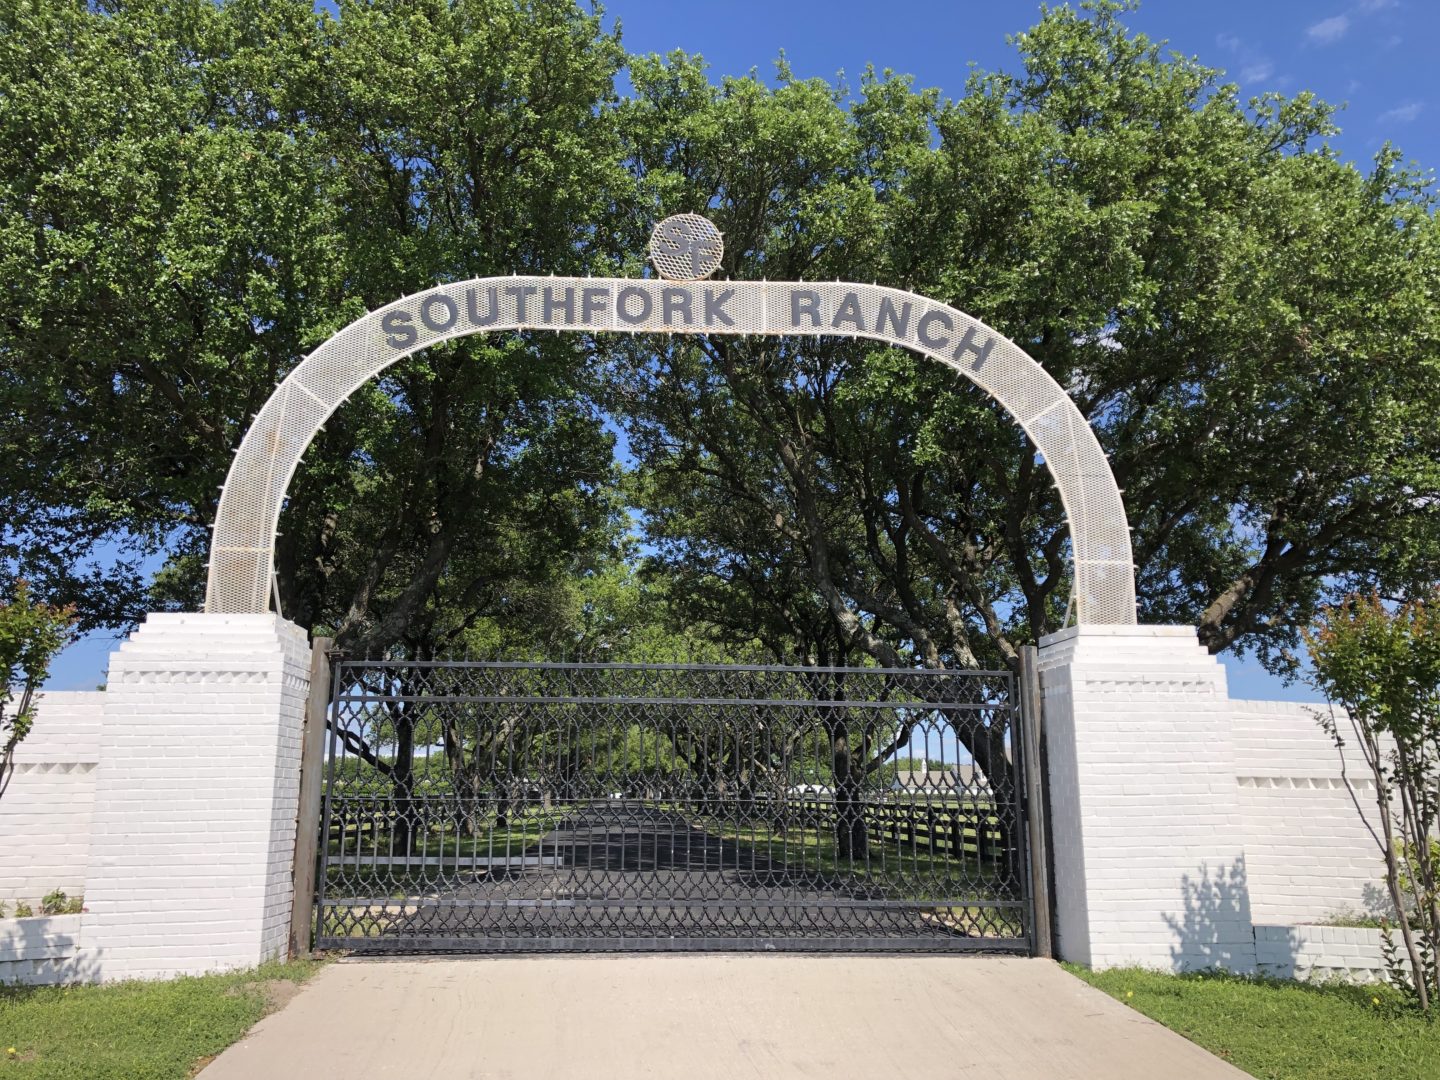 Southfork Ranch - Main Gate